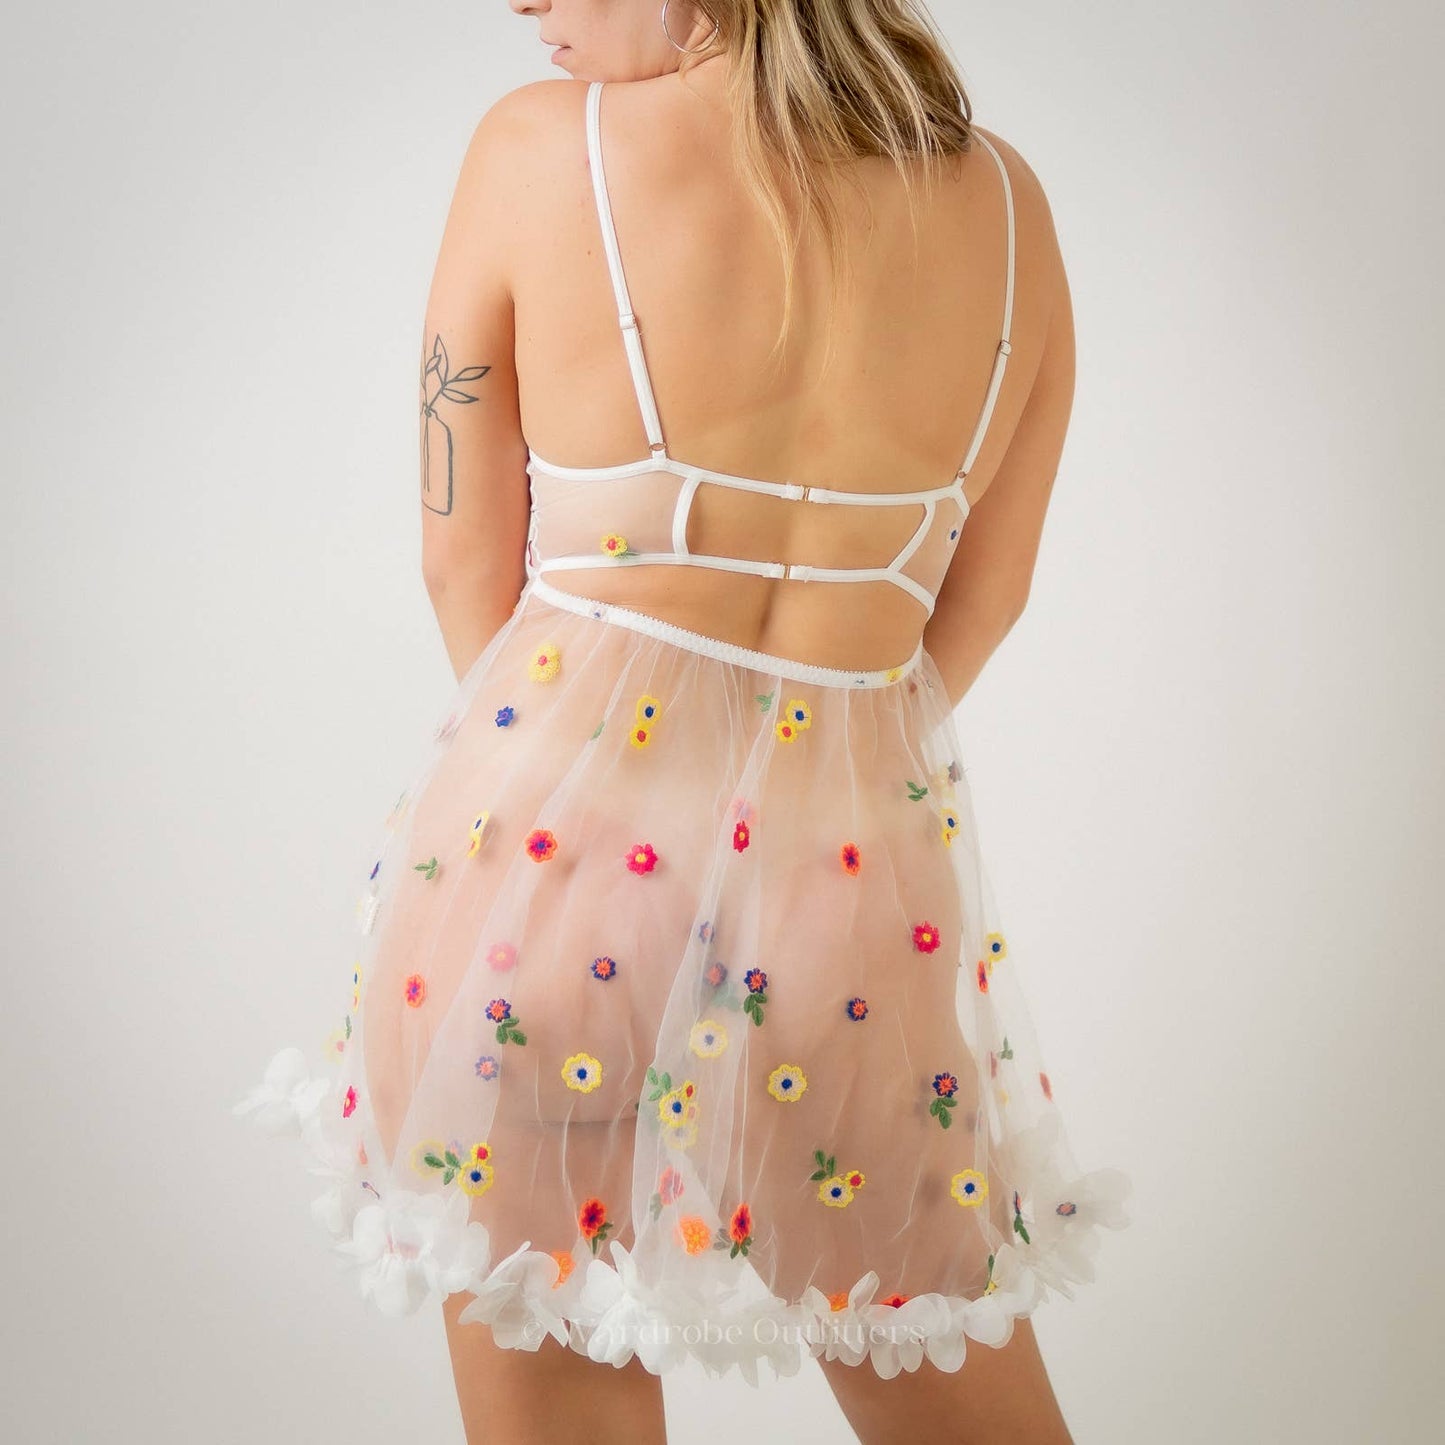 Floral Embroidery Sheer Mesh Ruffle Trim Babydoll Slip Dress Lingerie